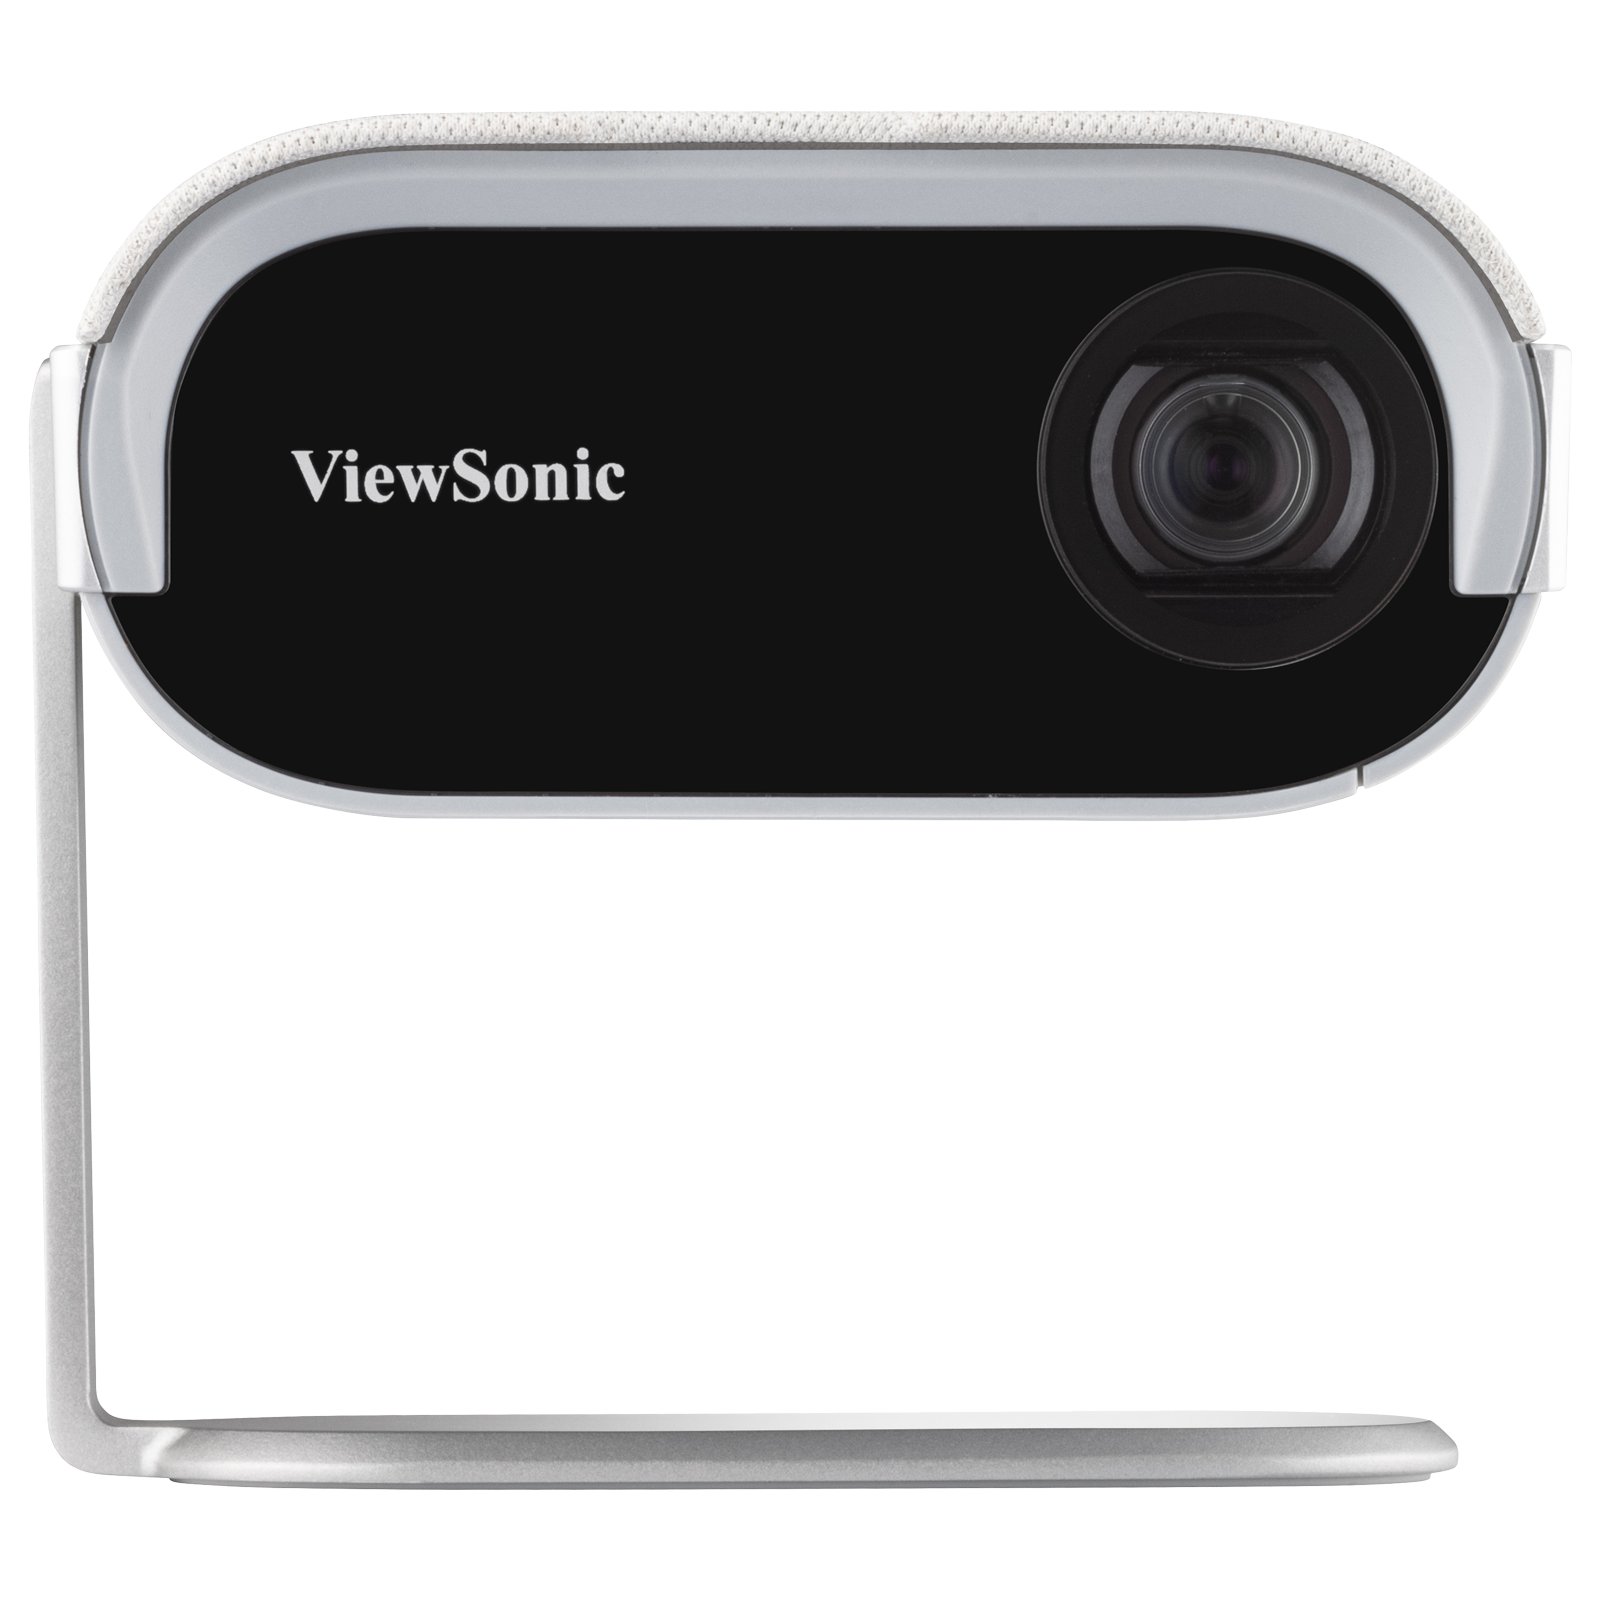 ViewSonic M1 Pro HD LED Projector (600 Lumens, HDMI, USB, WiFi, Bluetooth, Harman Kardon Speakers, Silver)